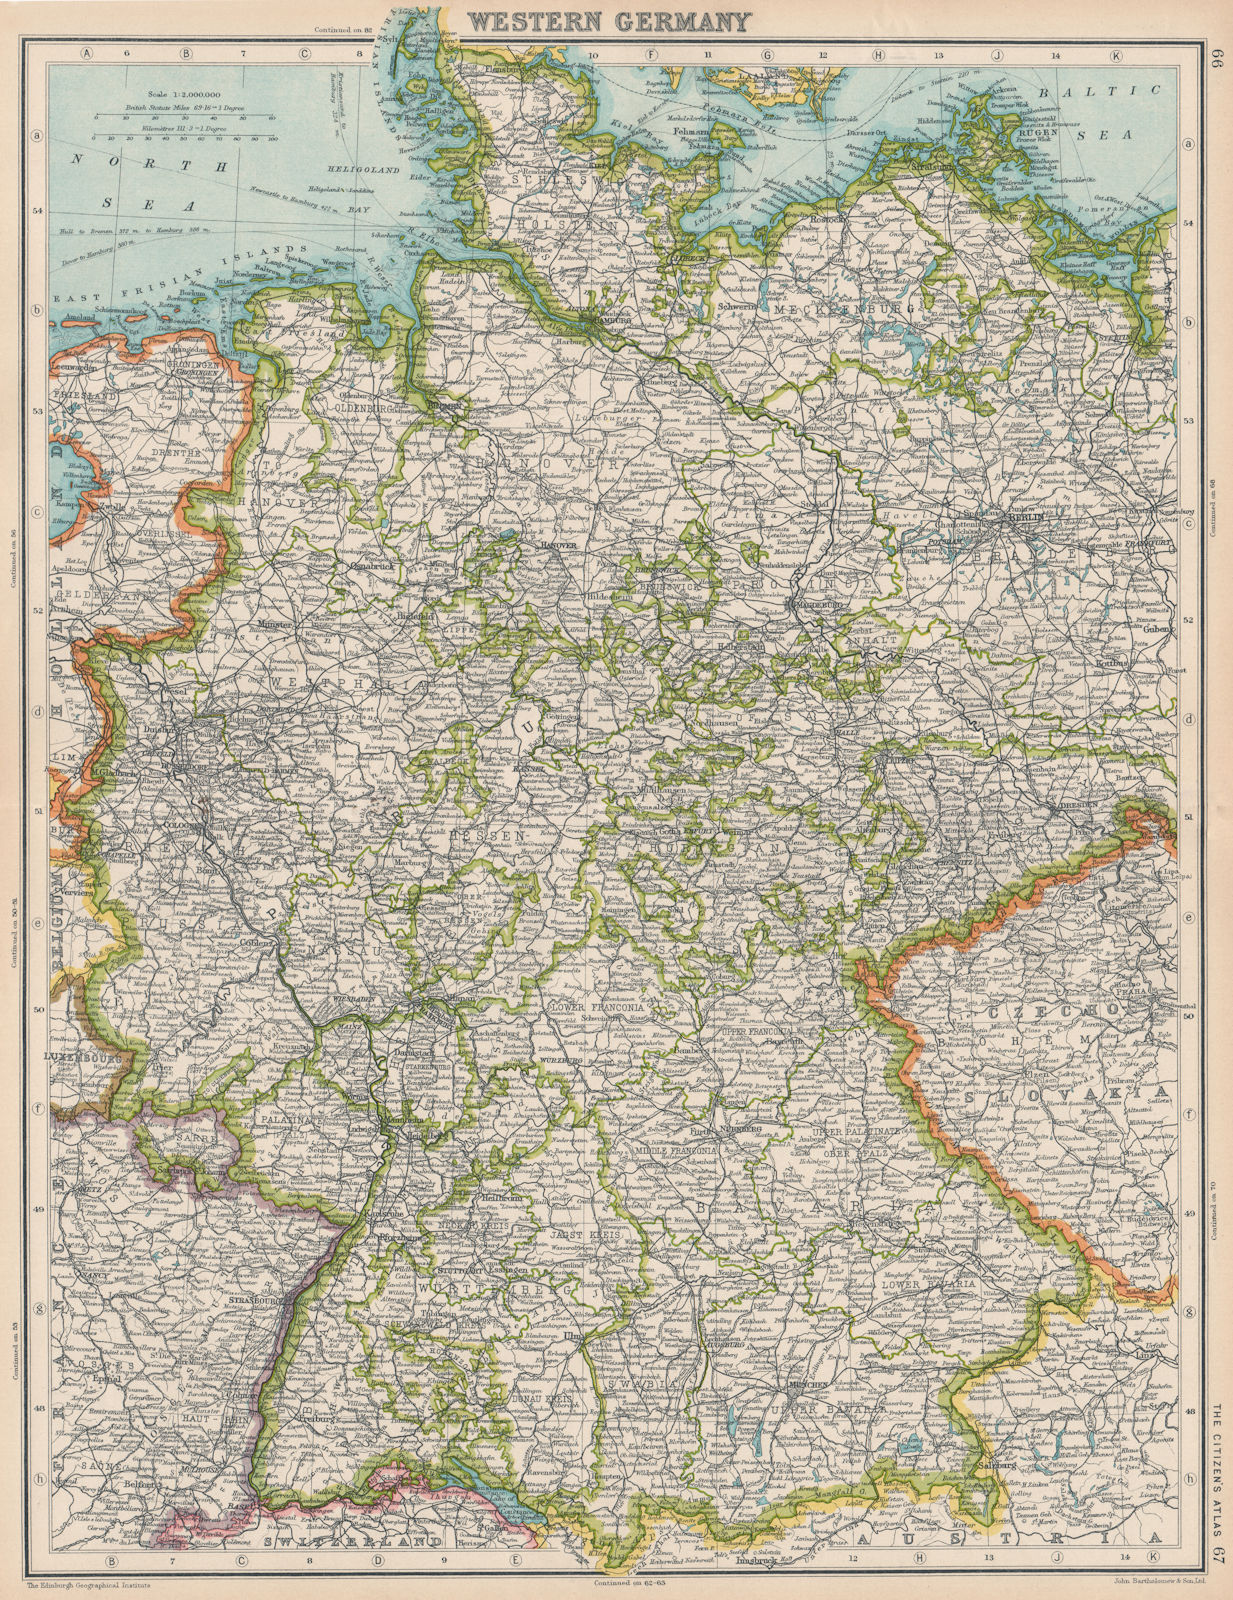 WESTERN GERMANY. Shows Saarbeckengebiet under League of Nations mandate 1924 map